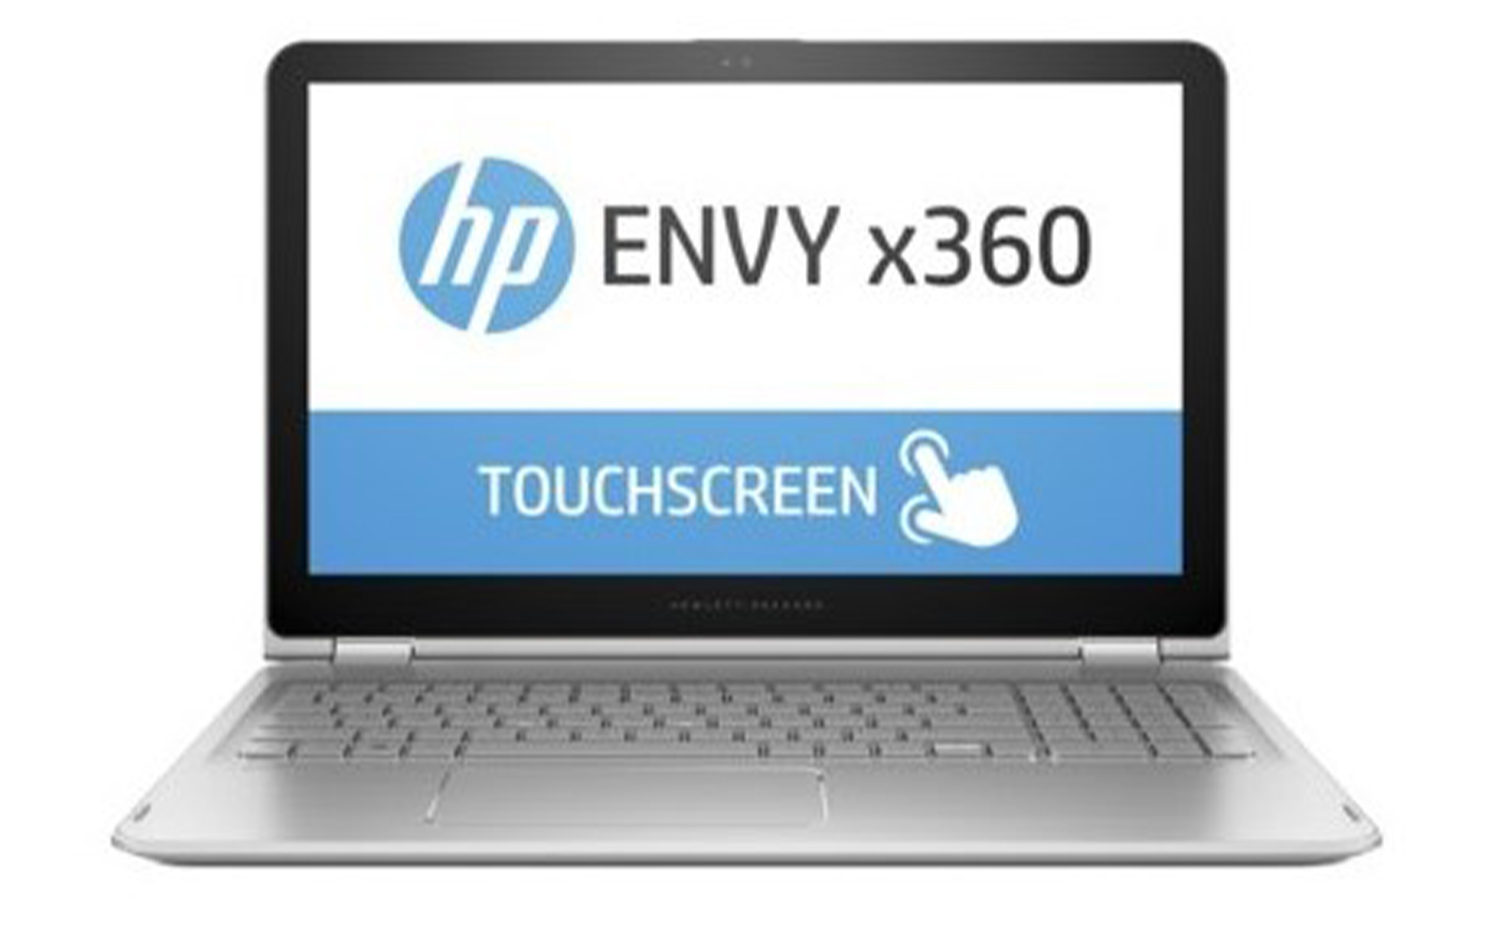 HP Envy x360 m6 Intel Core i7 5th Gen 8GB RAM 1TB HDD Touchscreen Windows 10 Home